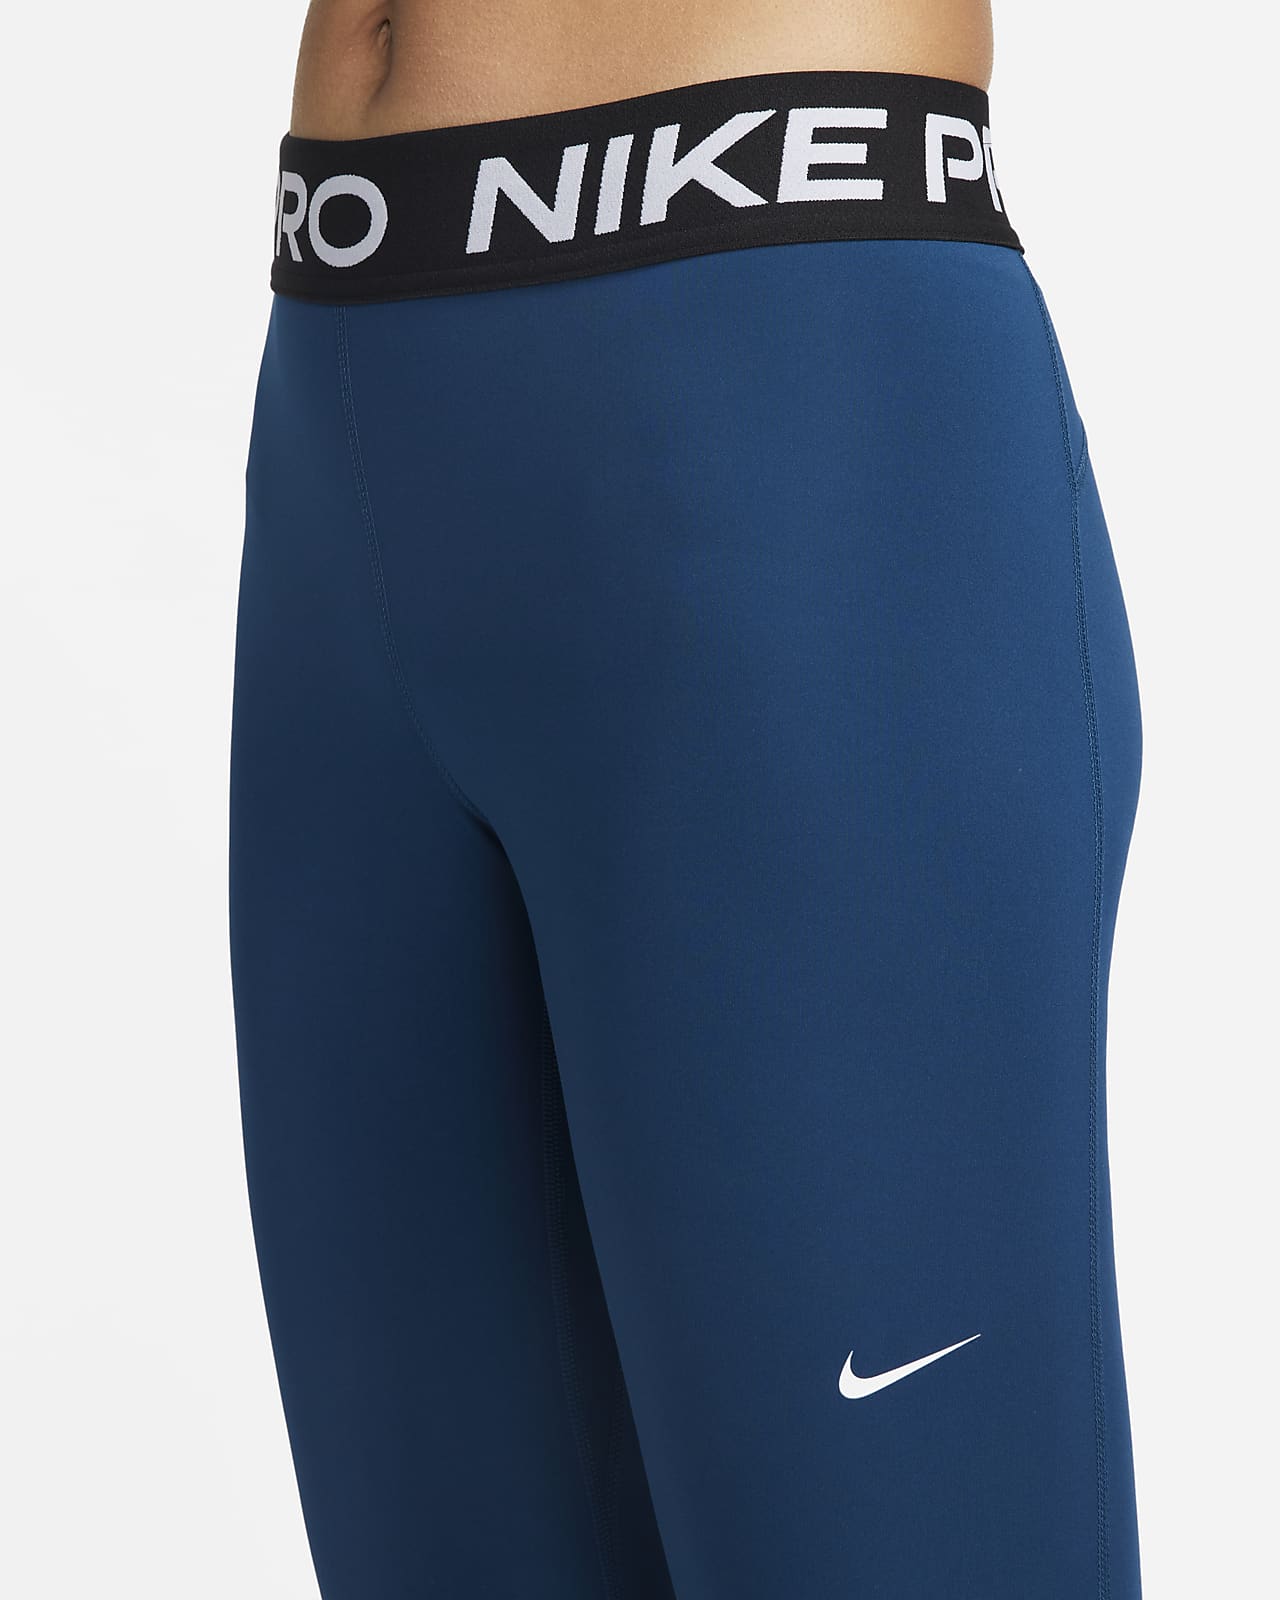 Leggings con paneles de malla cropped de medio para mujer Nike 365. Nike.com